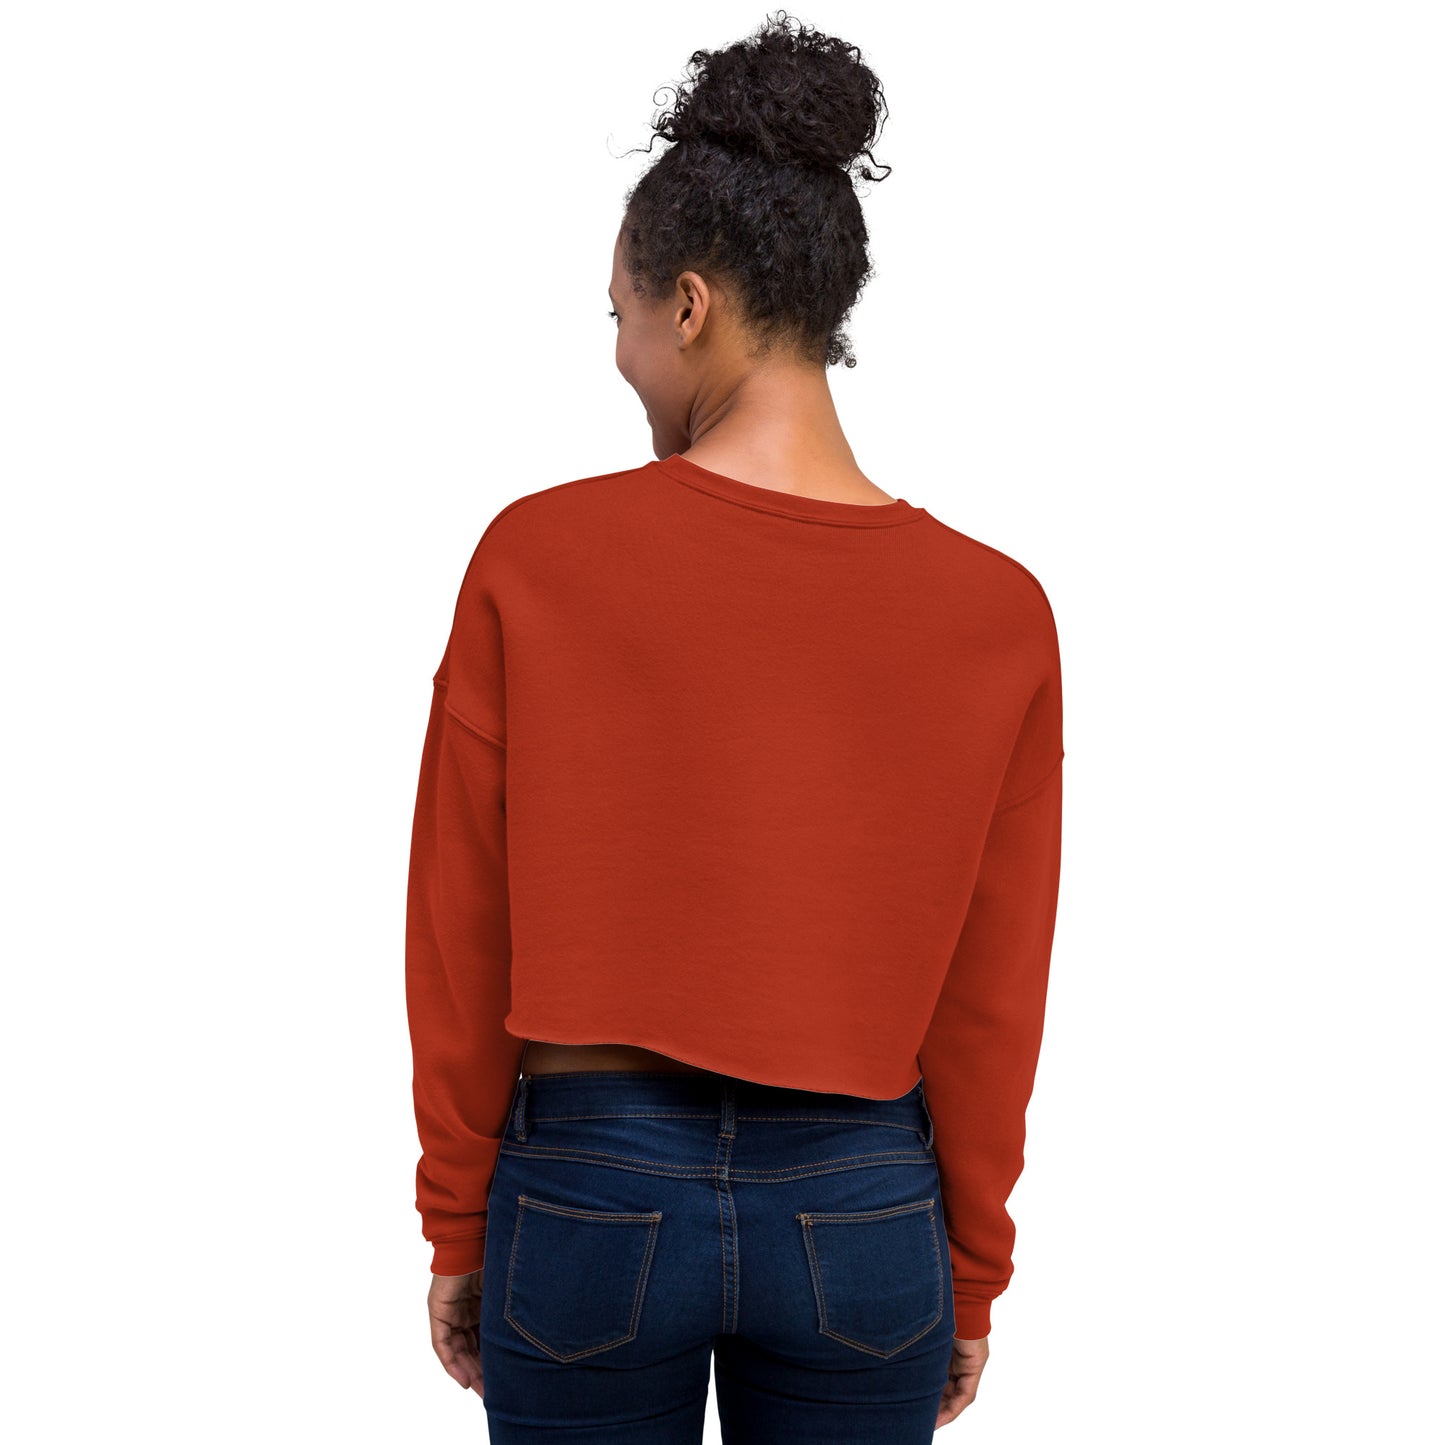 Crop Sweatshirt Womens (Red Lips Closed - Fun Lips 0023)